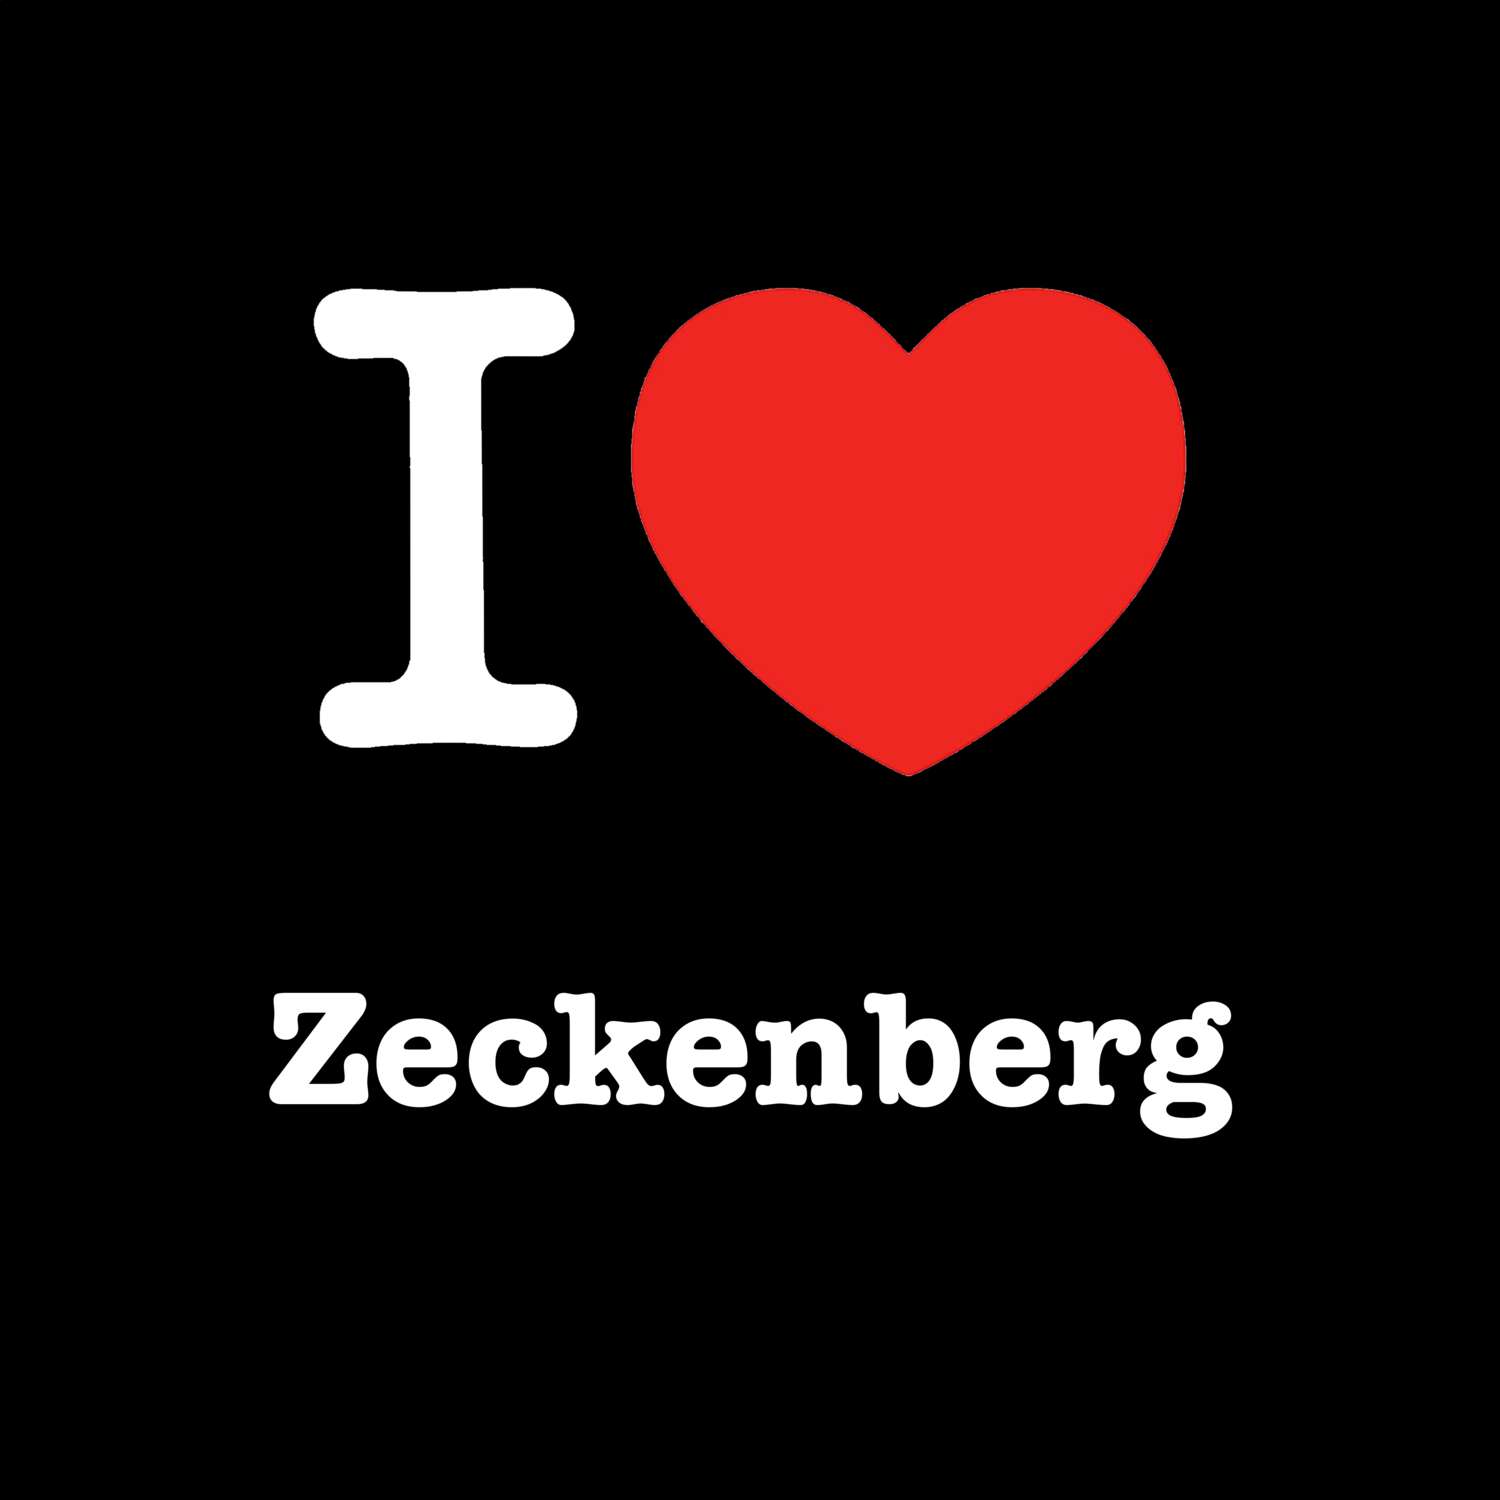 Zeckenberg T-Shirt »I love«